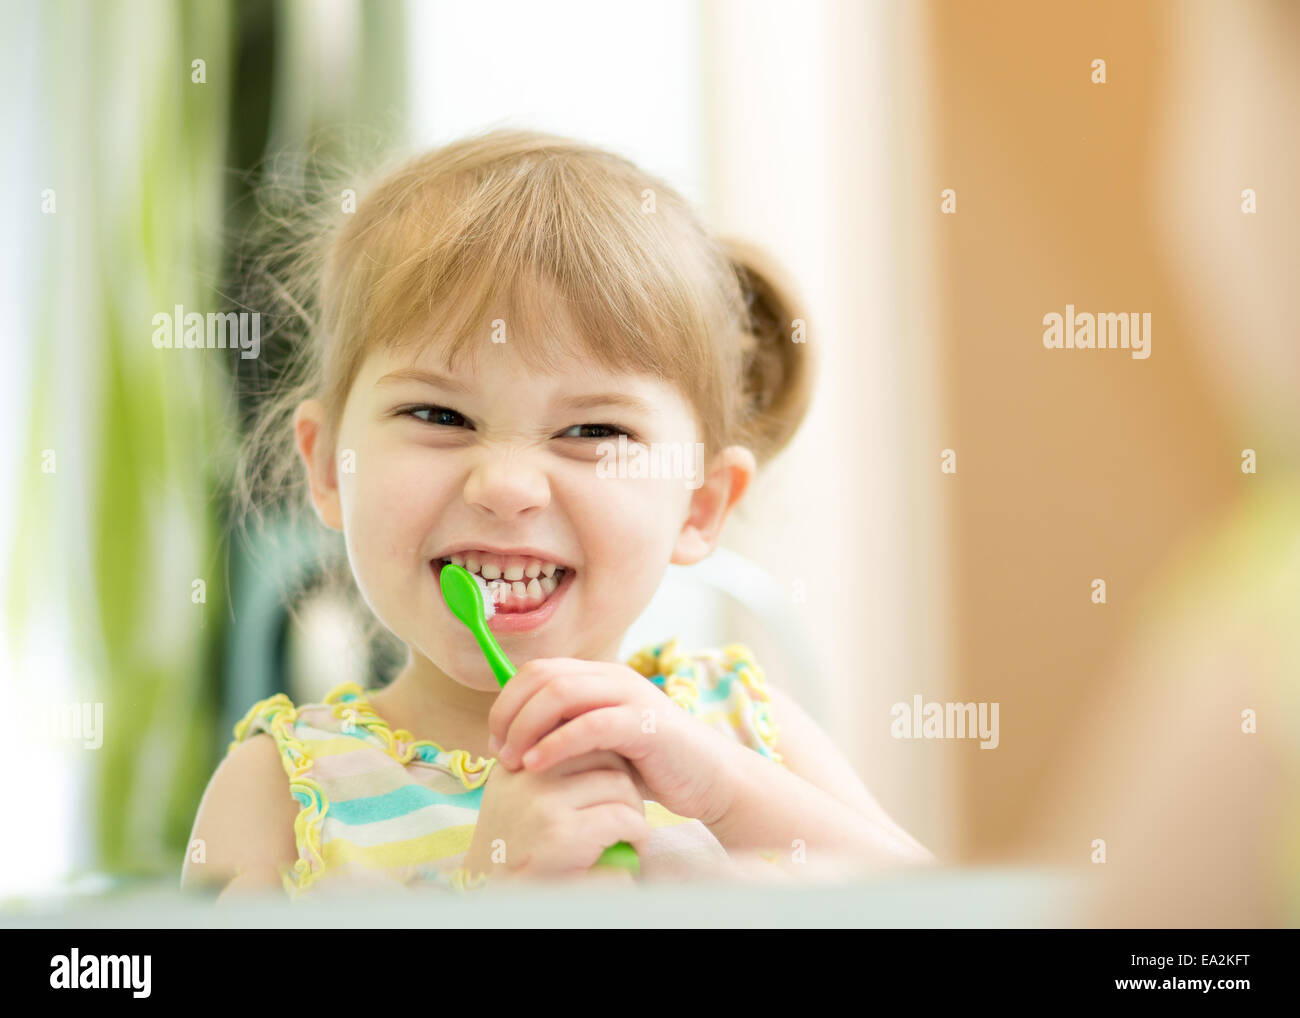 funny child girl brushing teeth Stock Photo